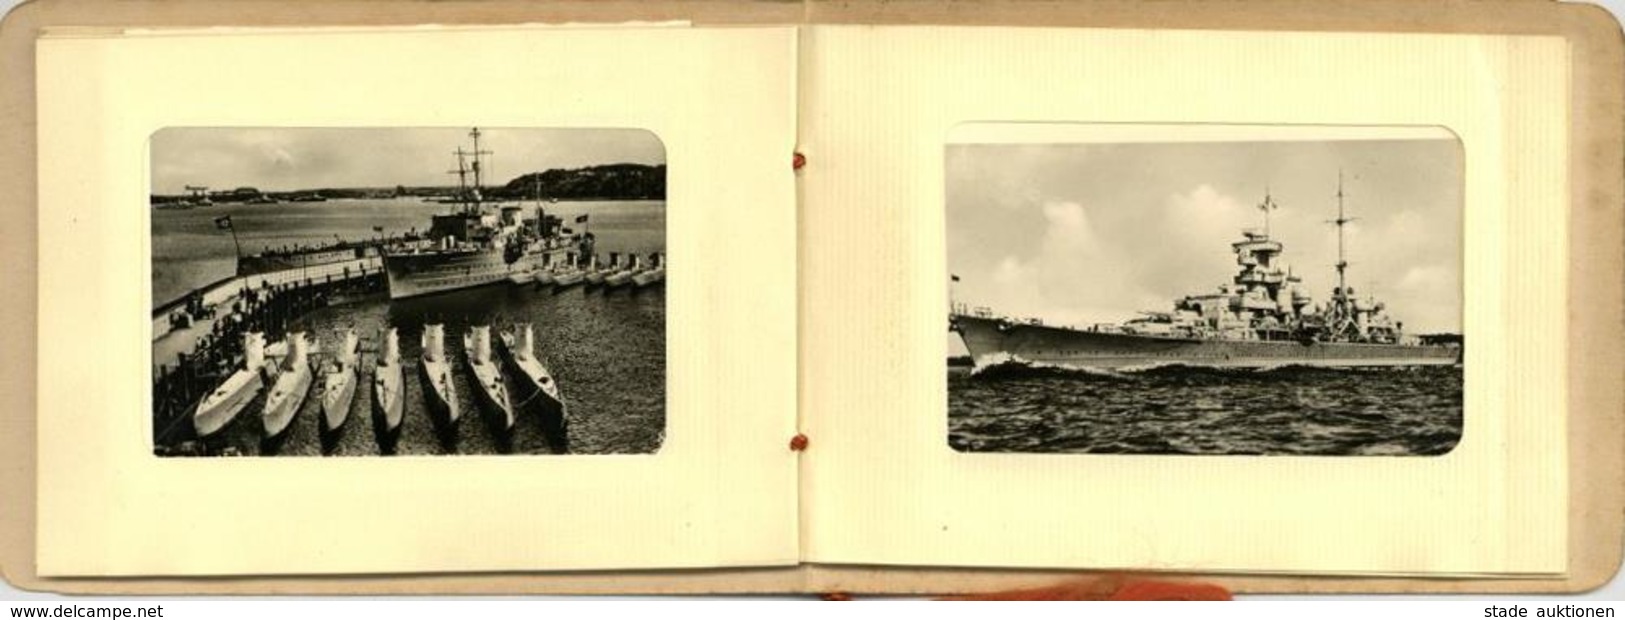 Schiff Kreuzer WK II Die Deutsche Flotte Kleines Fotoalbum Mit 12 Fotos I-II (fleckig) Bateaux Bateaux - Guerre